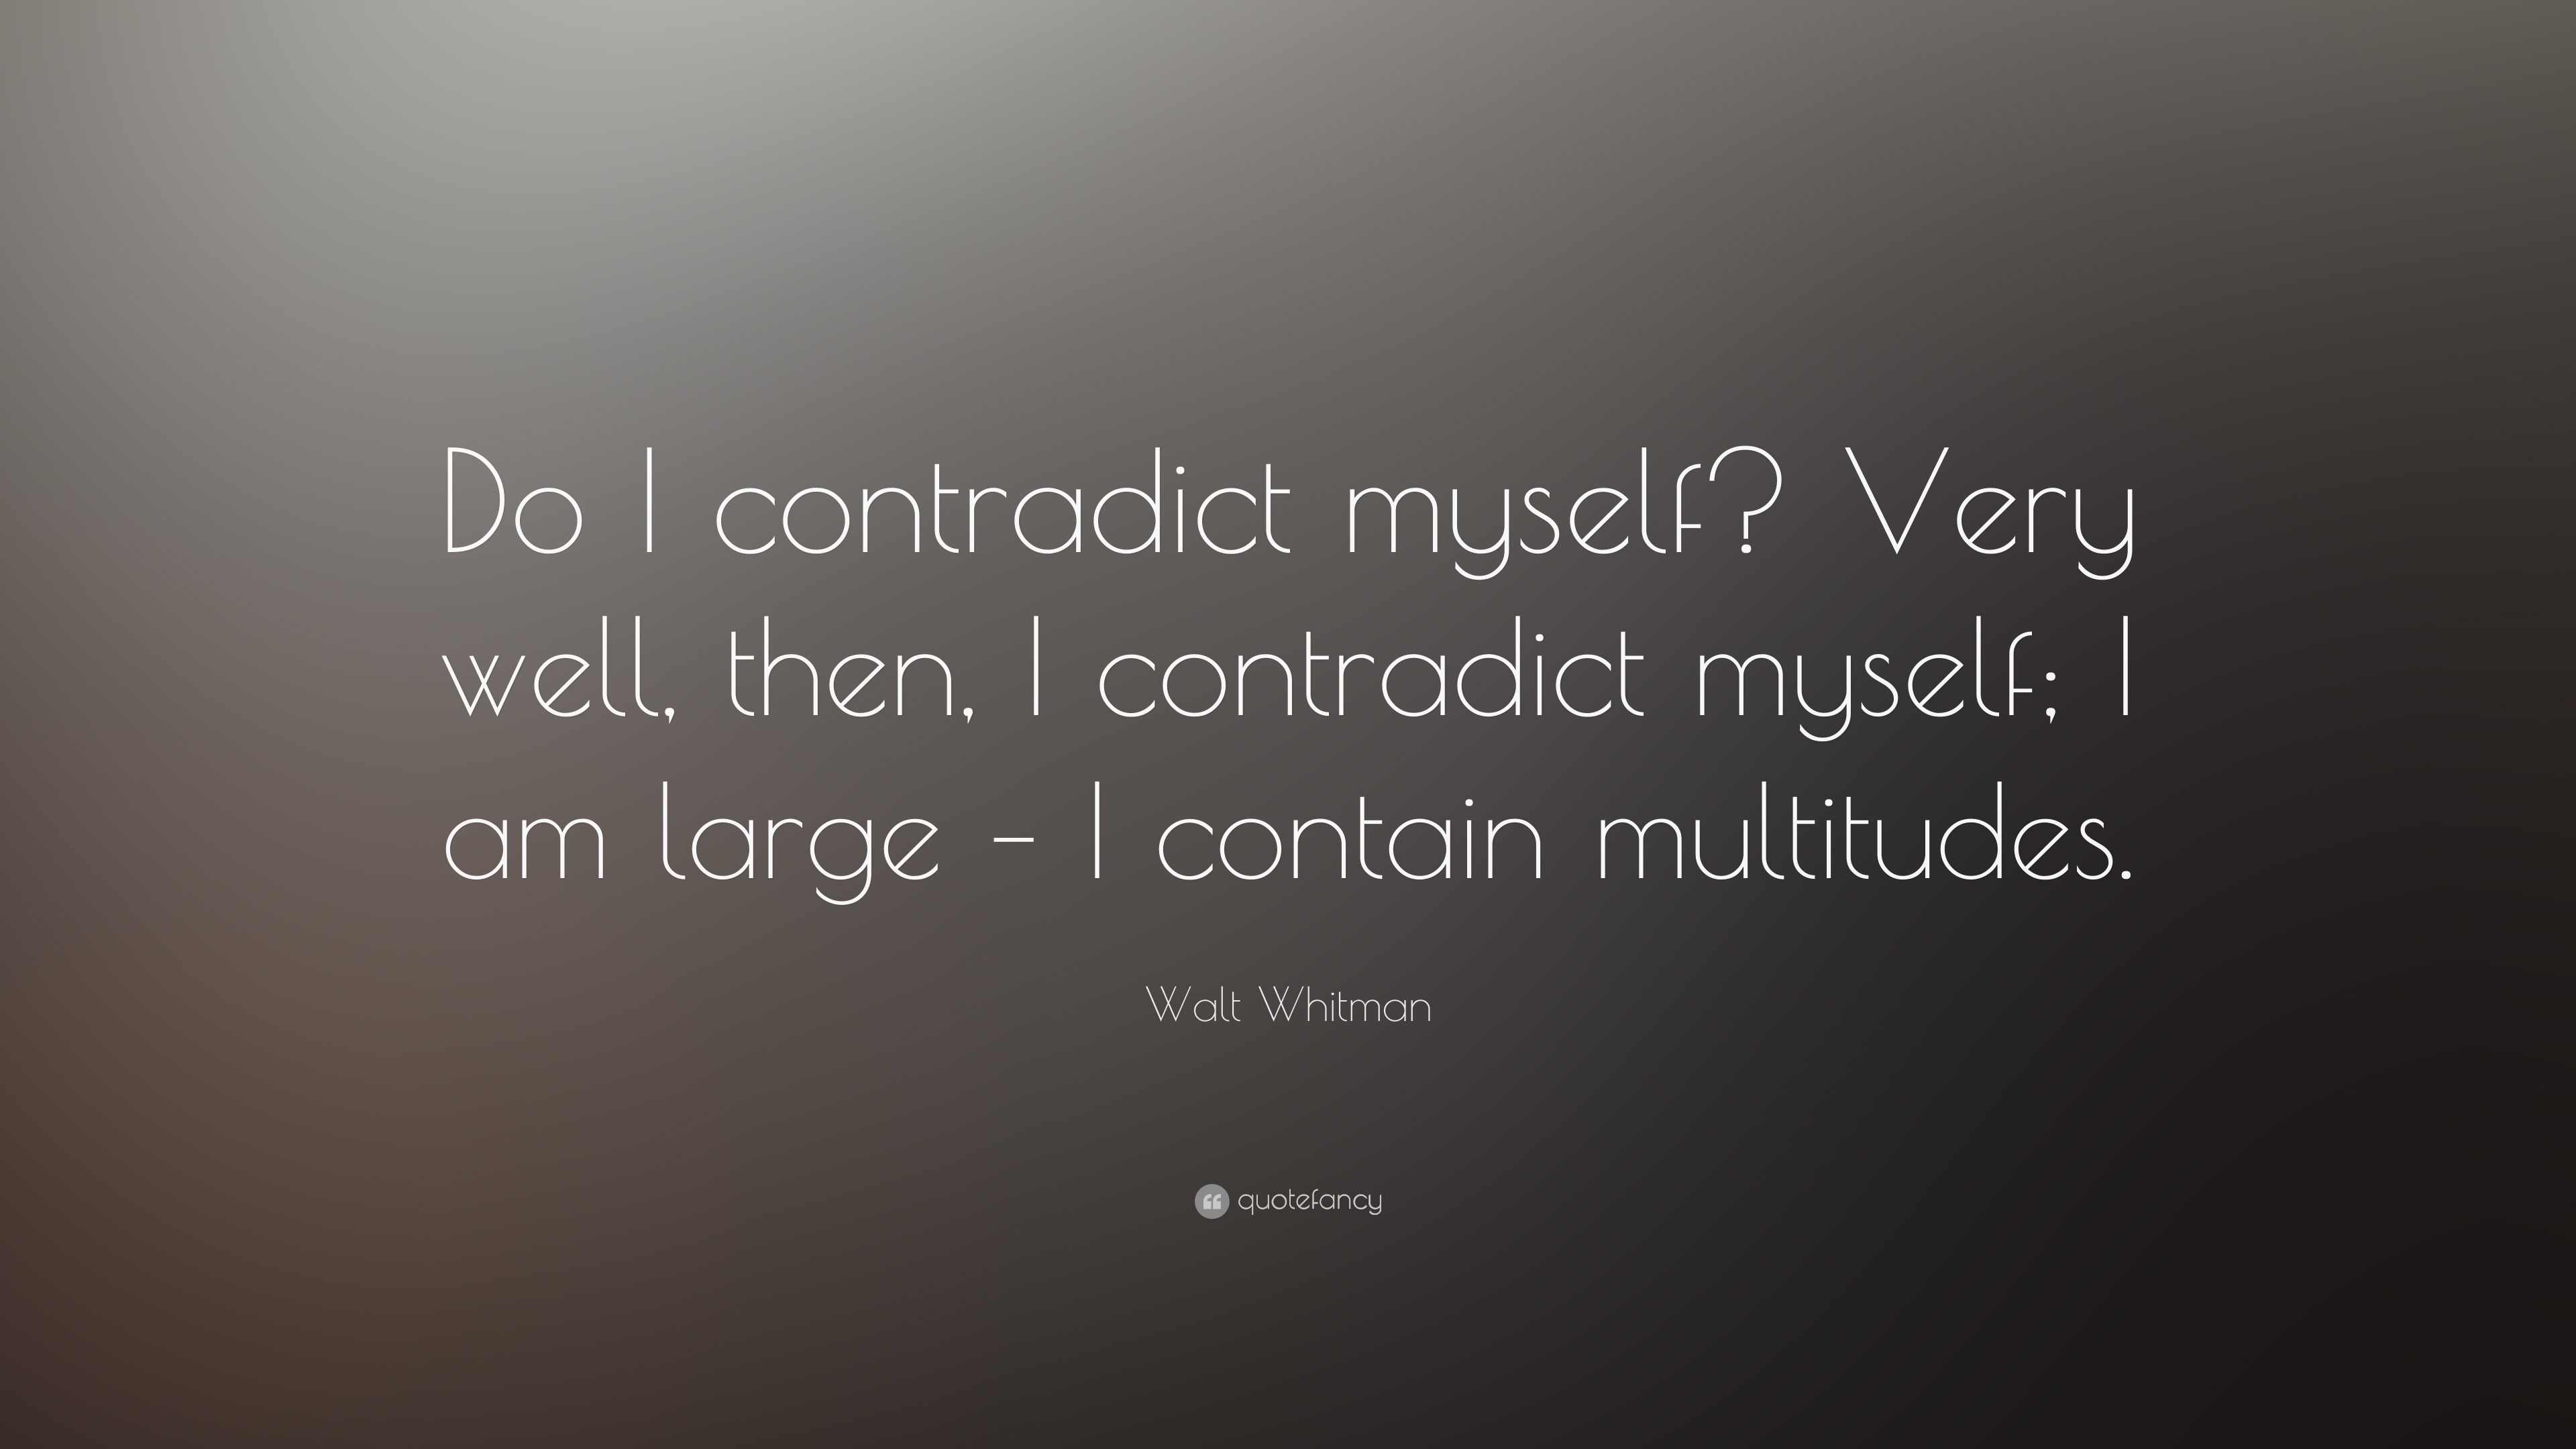 i contradict myself